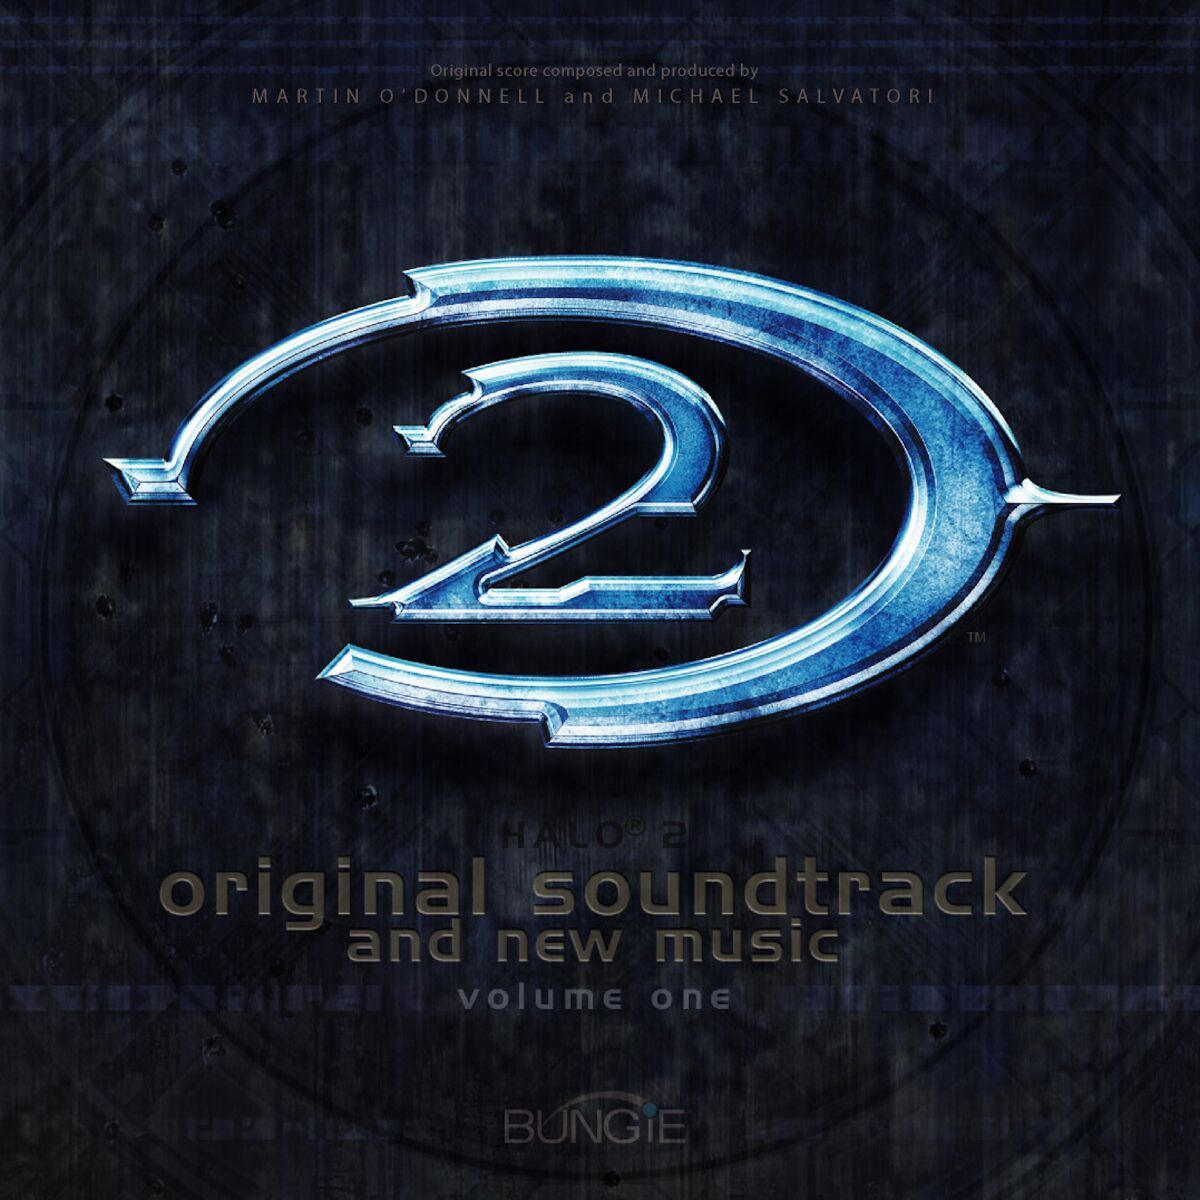 Halo 2 Original Soundtrack - Wikipedia